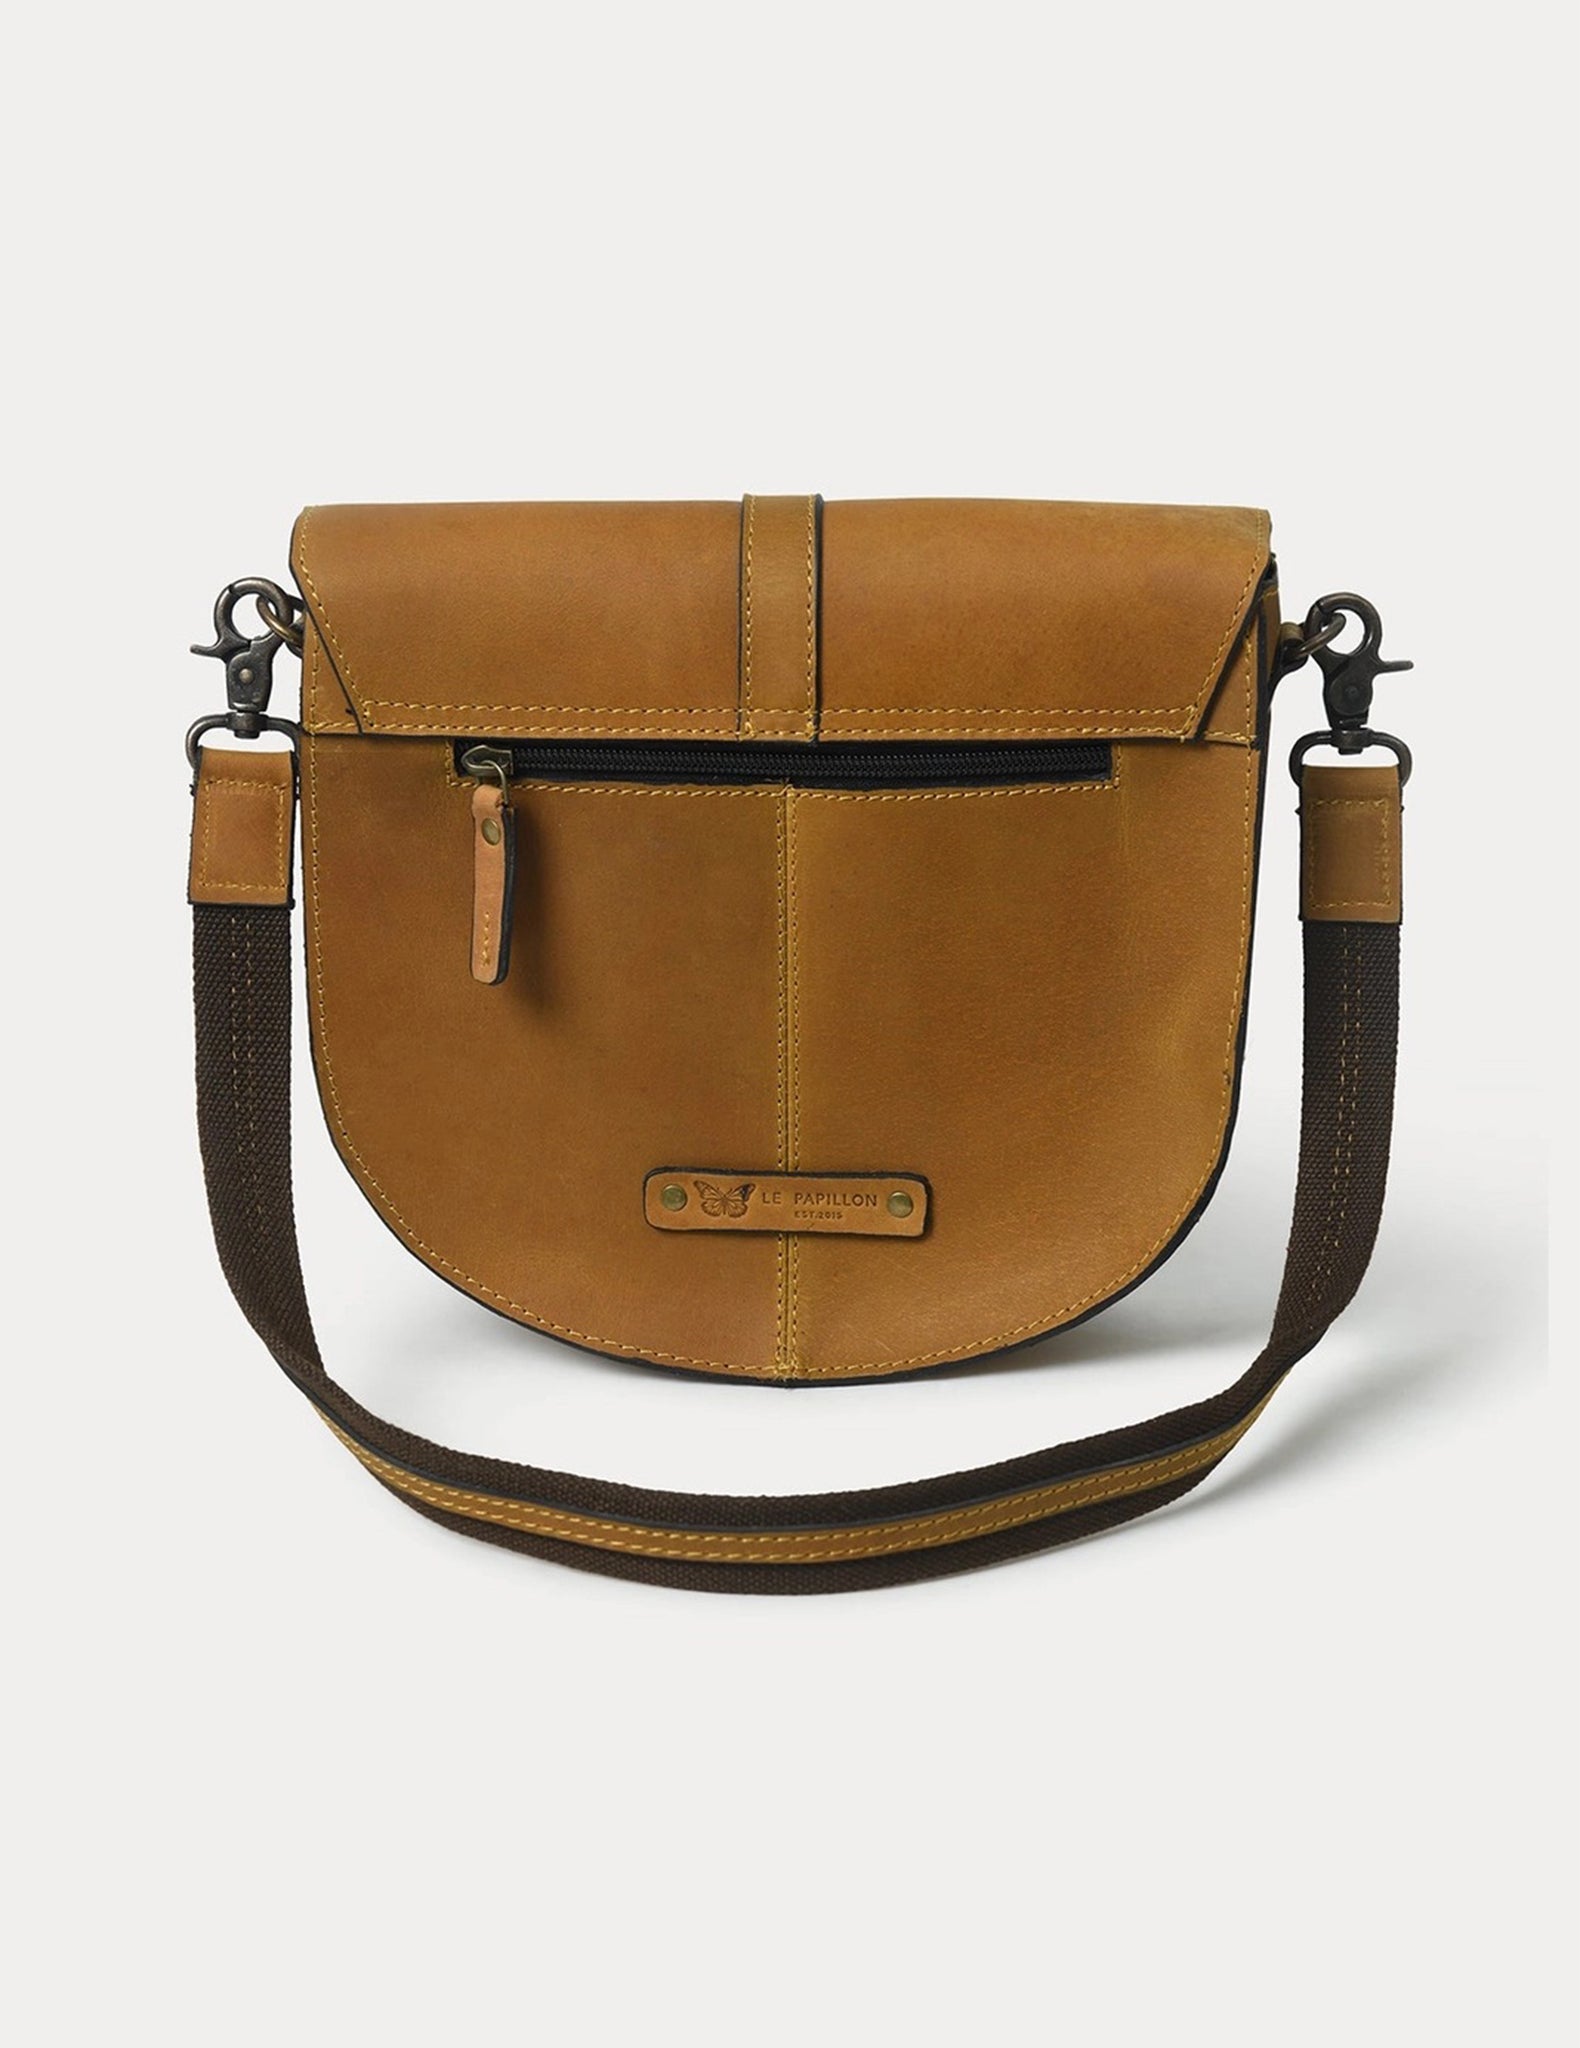 PATRICIA NASH BARCELONA Brown Italian Leather Crossbody Saddle Bag Purse |  eBay